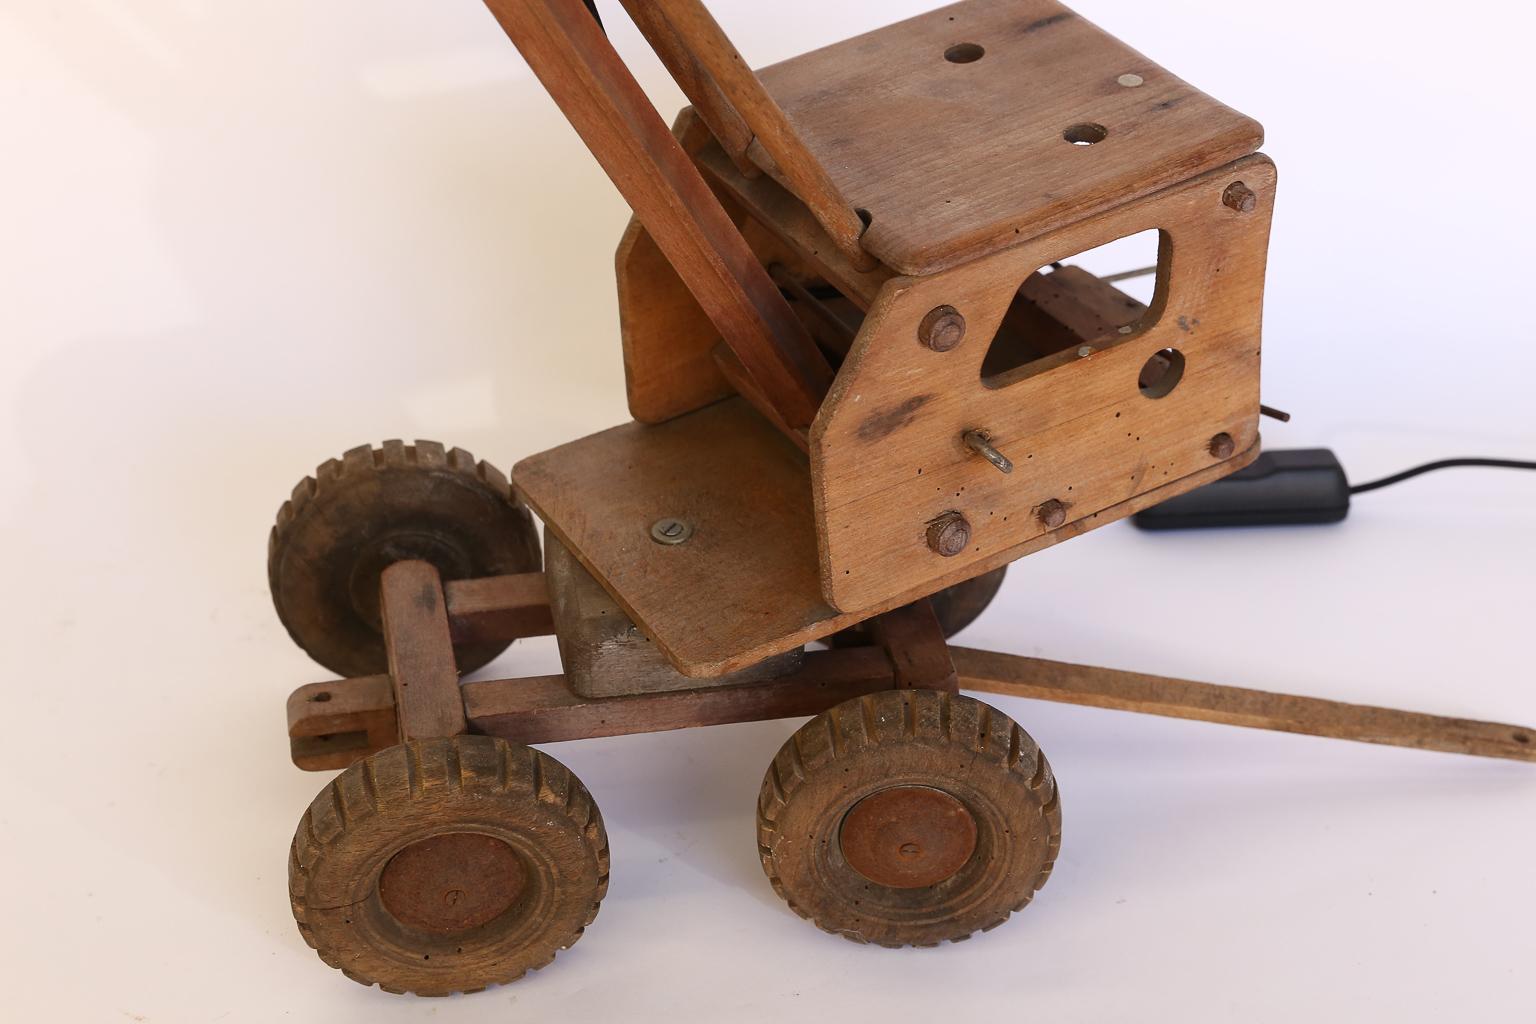 European Vintage Wood Toy Crane Repurposed as a Table Lamp